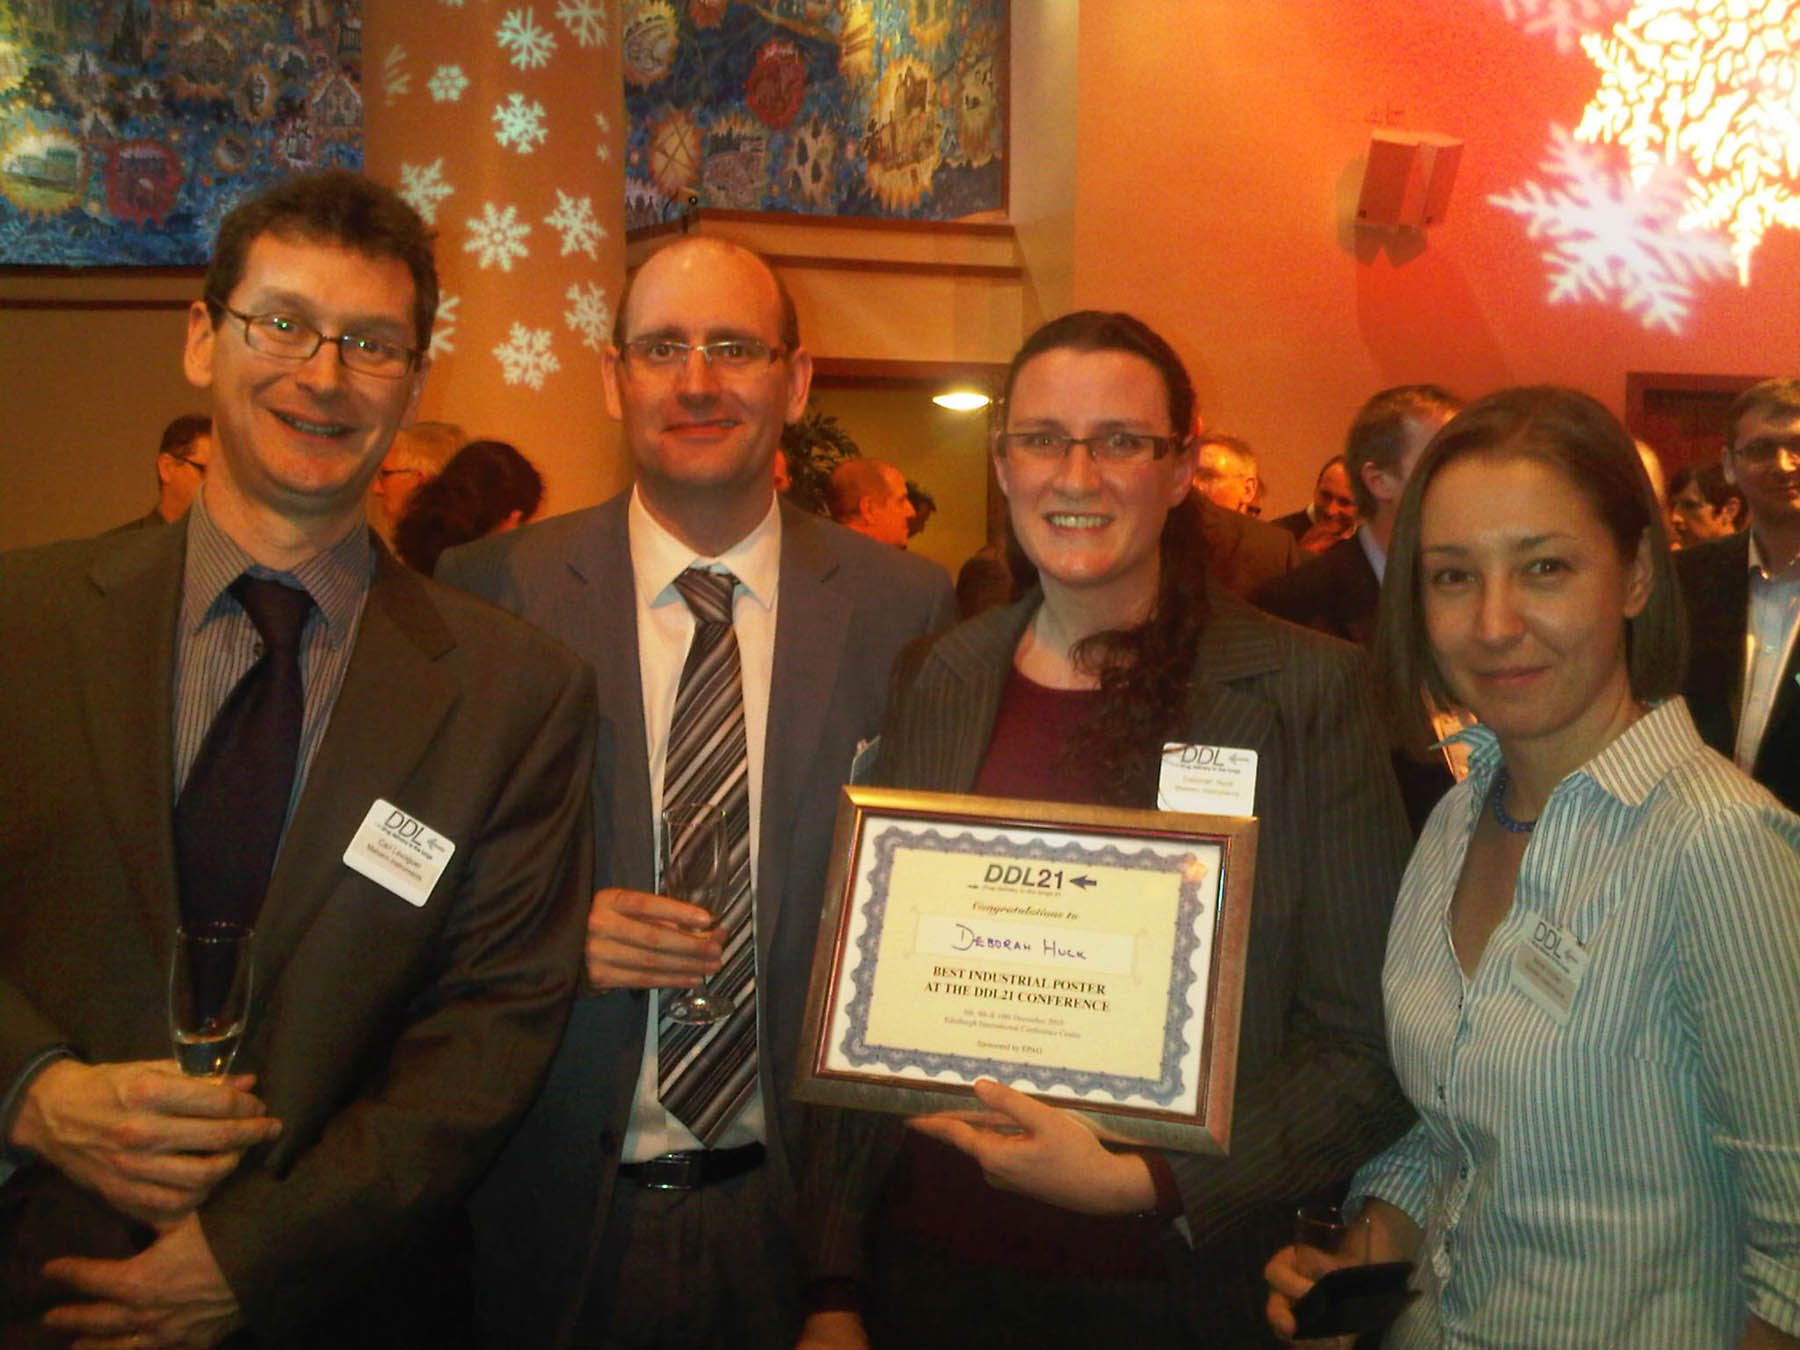 Malvern team receives DDL Industry Poster Award (from left: Carl Levoguer, Andrew France, Deborah Huck, Anne Virden).